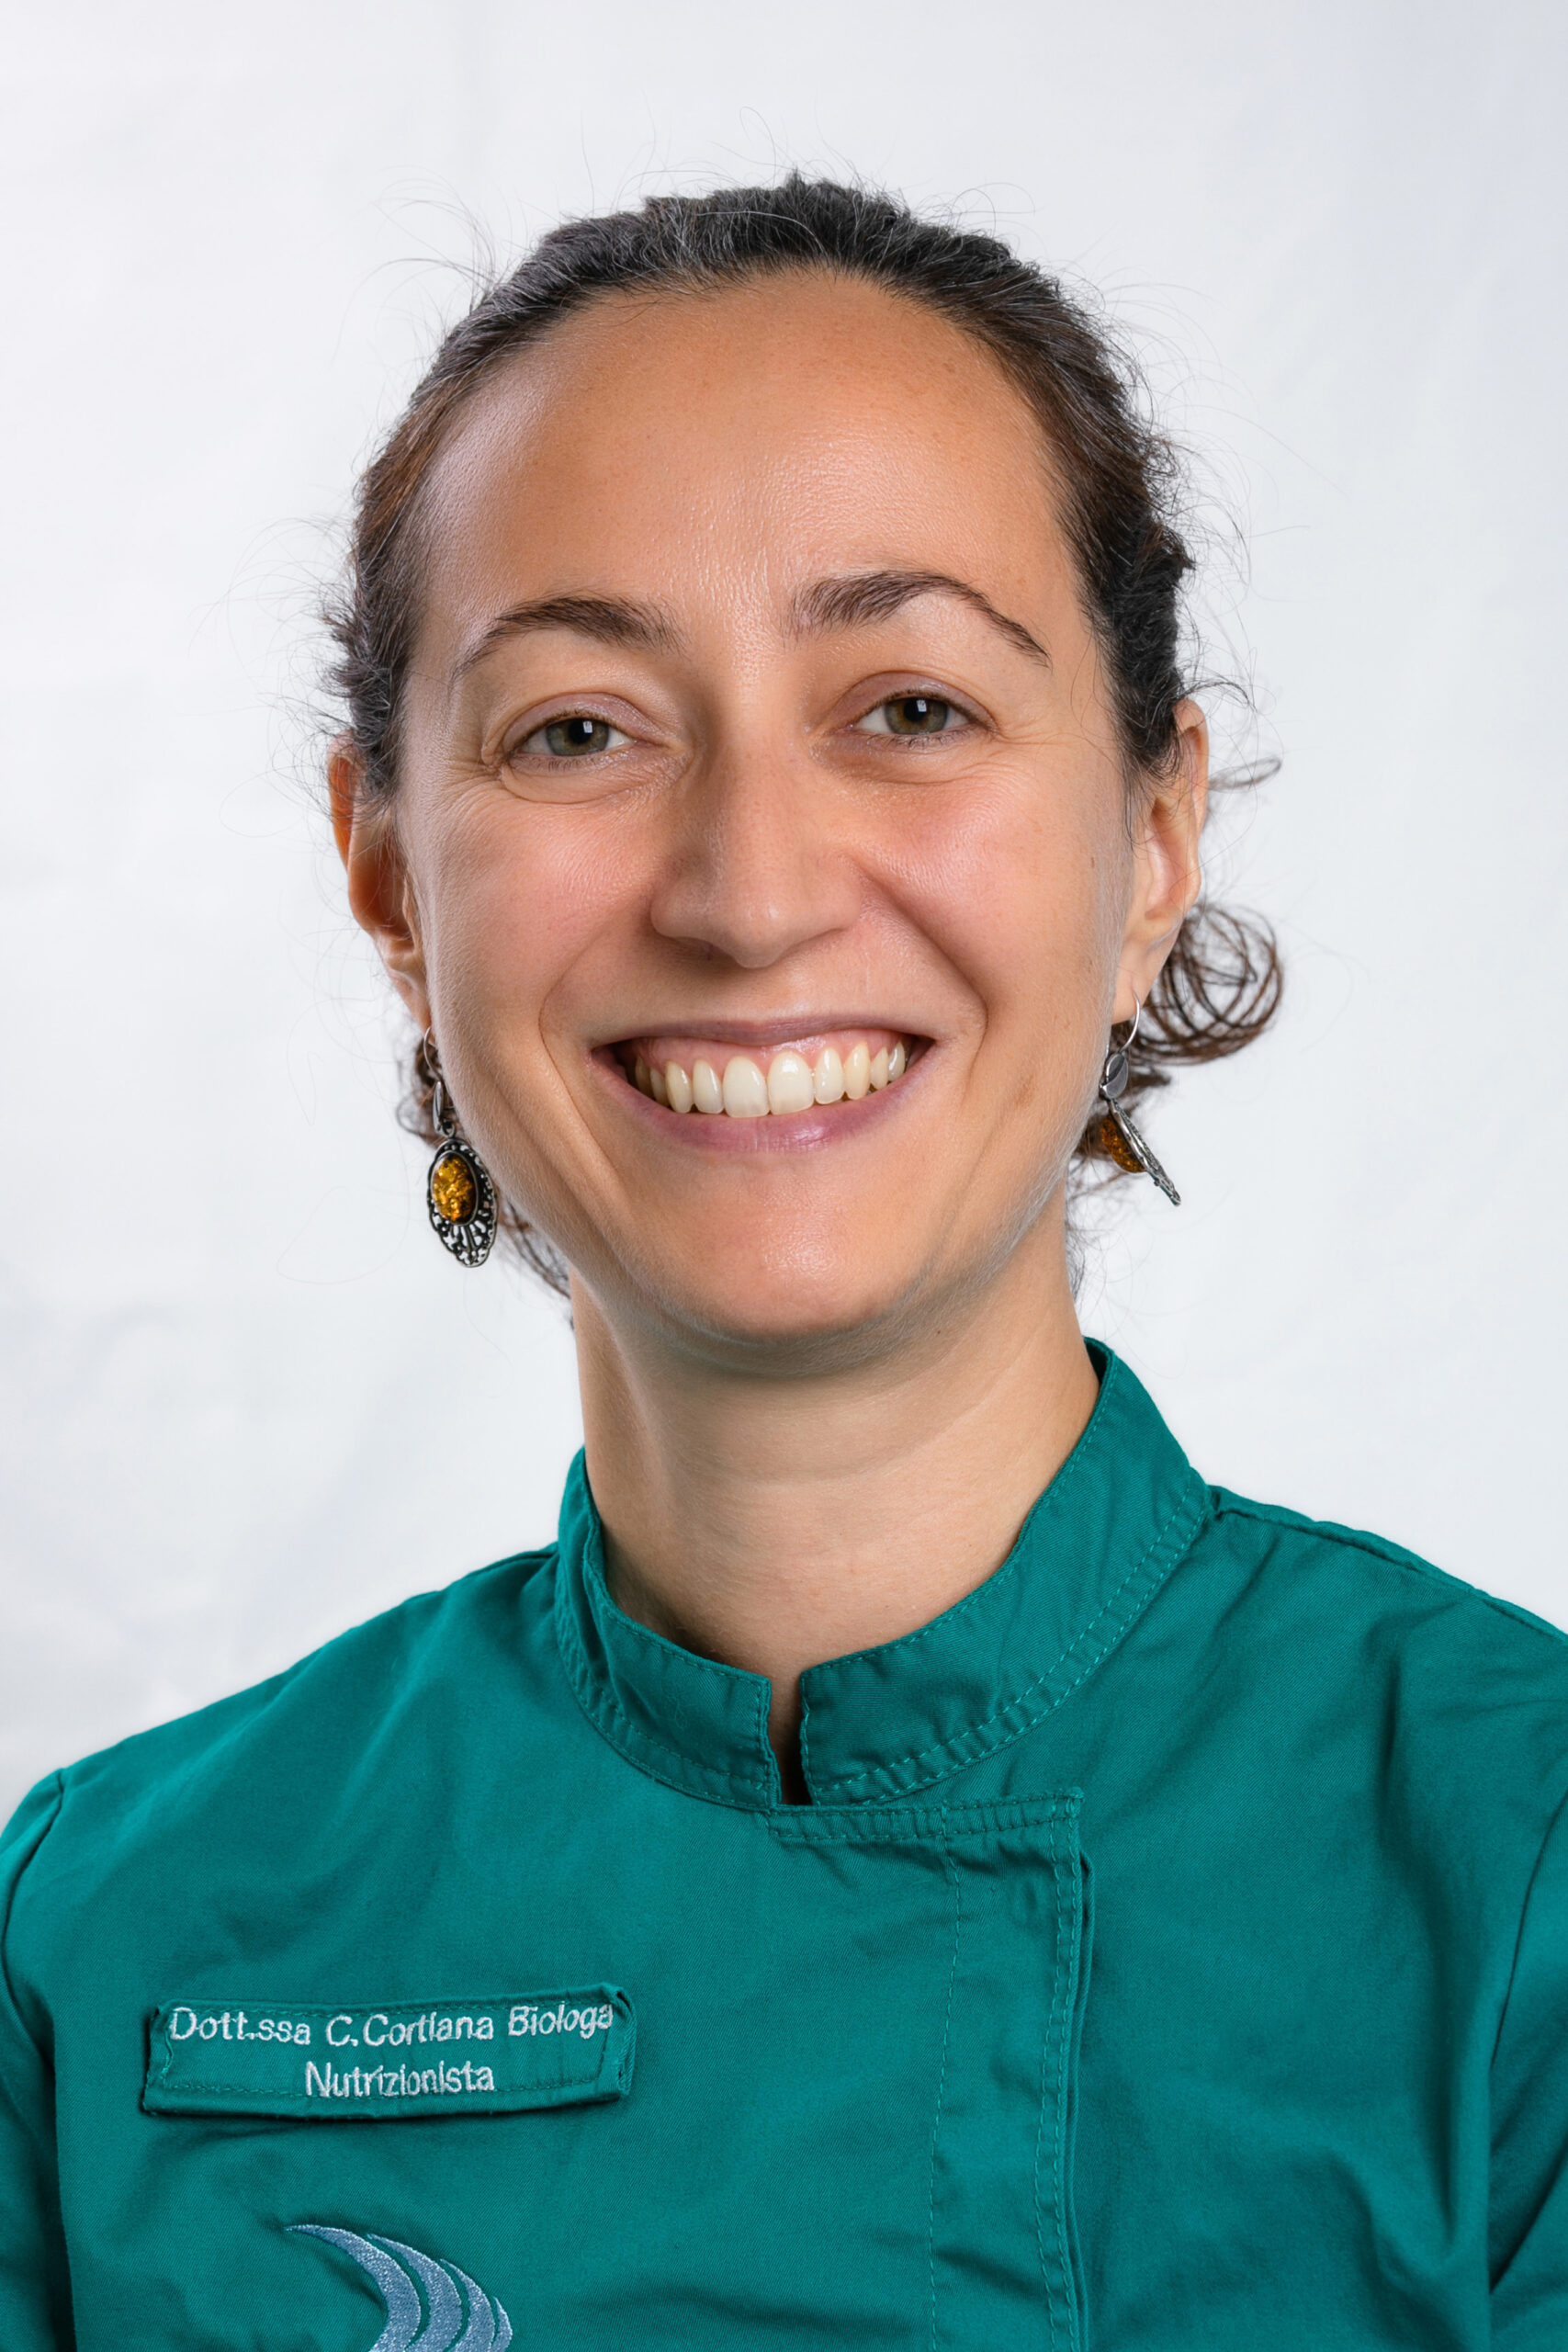 Dott.ssa Chiara Cortiana